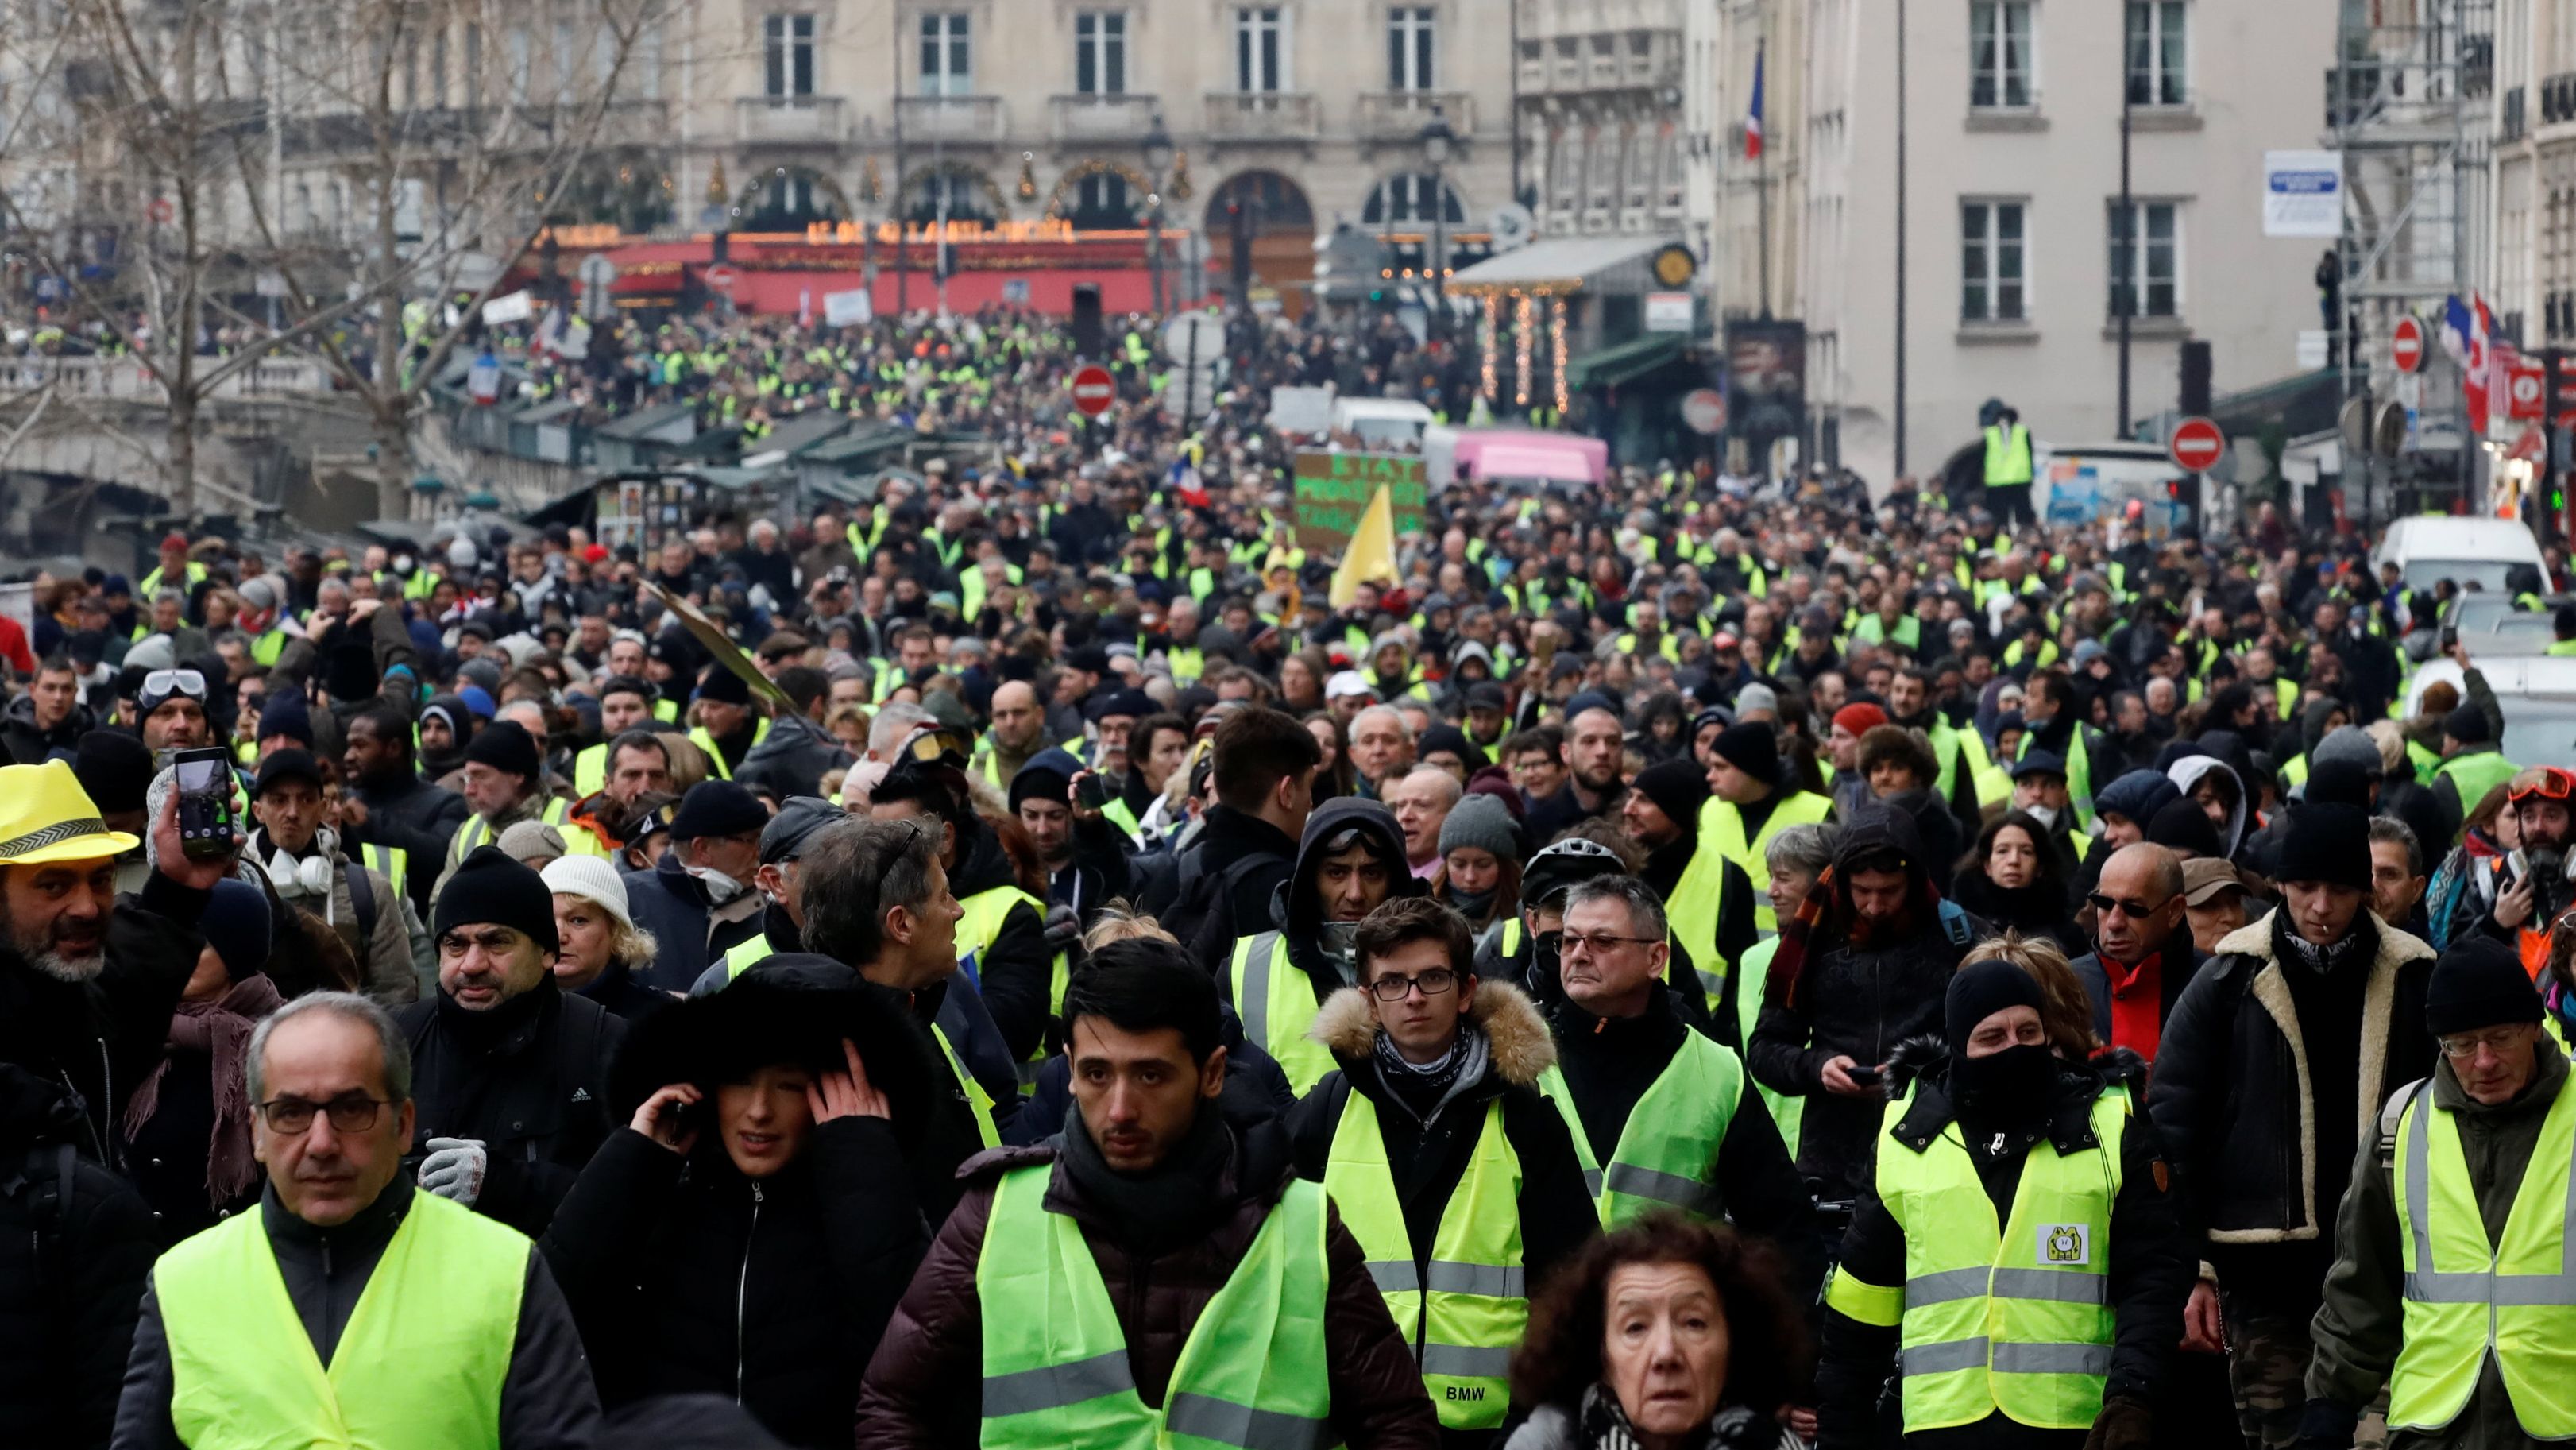 "Yellow vest" demonstrators march in Paris on Saturday